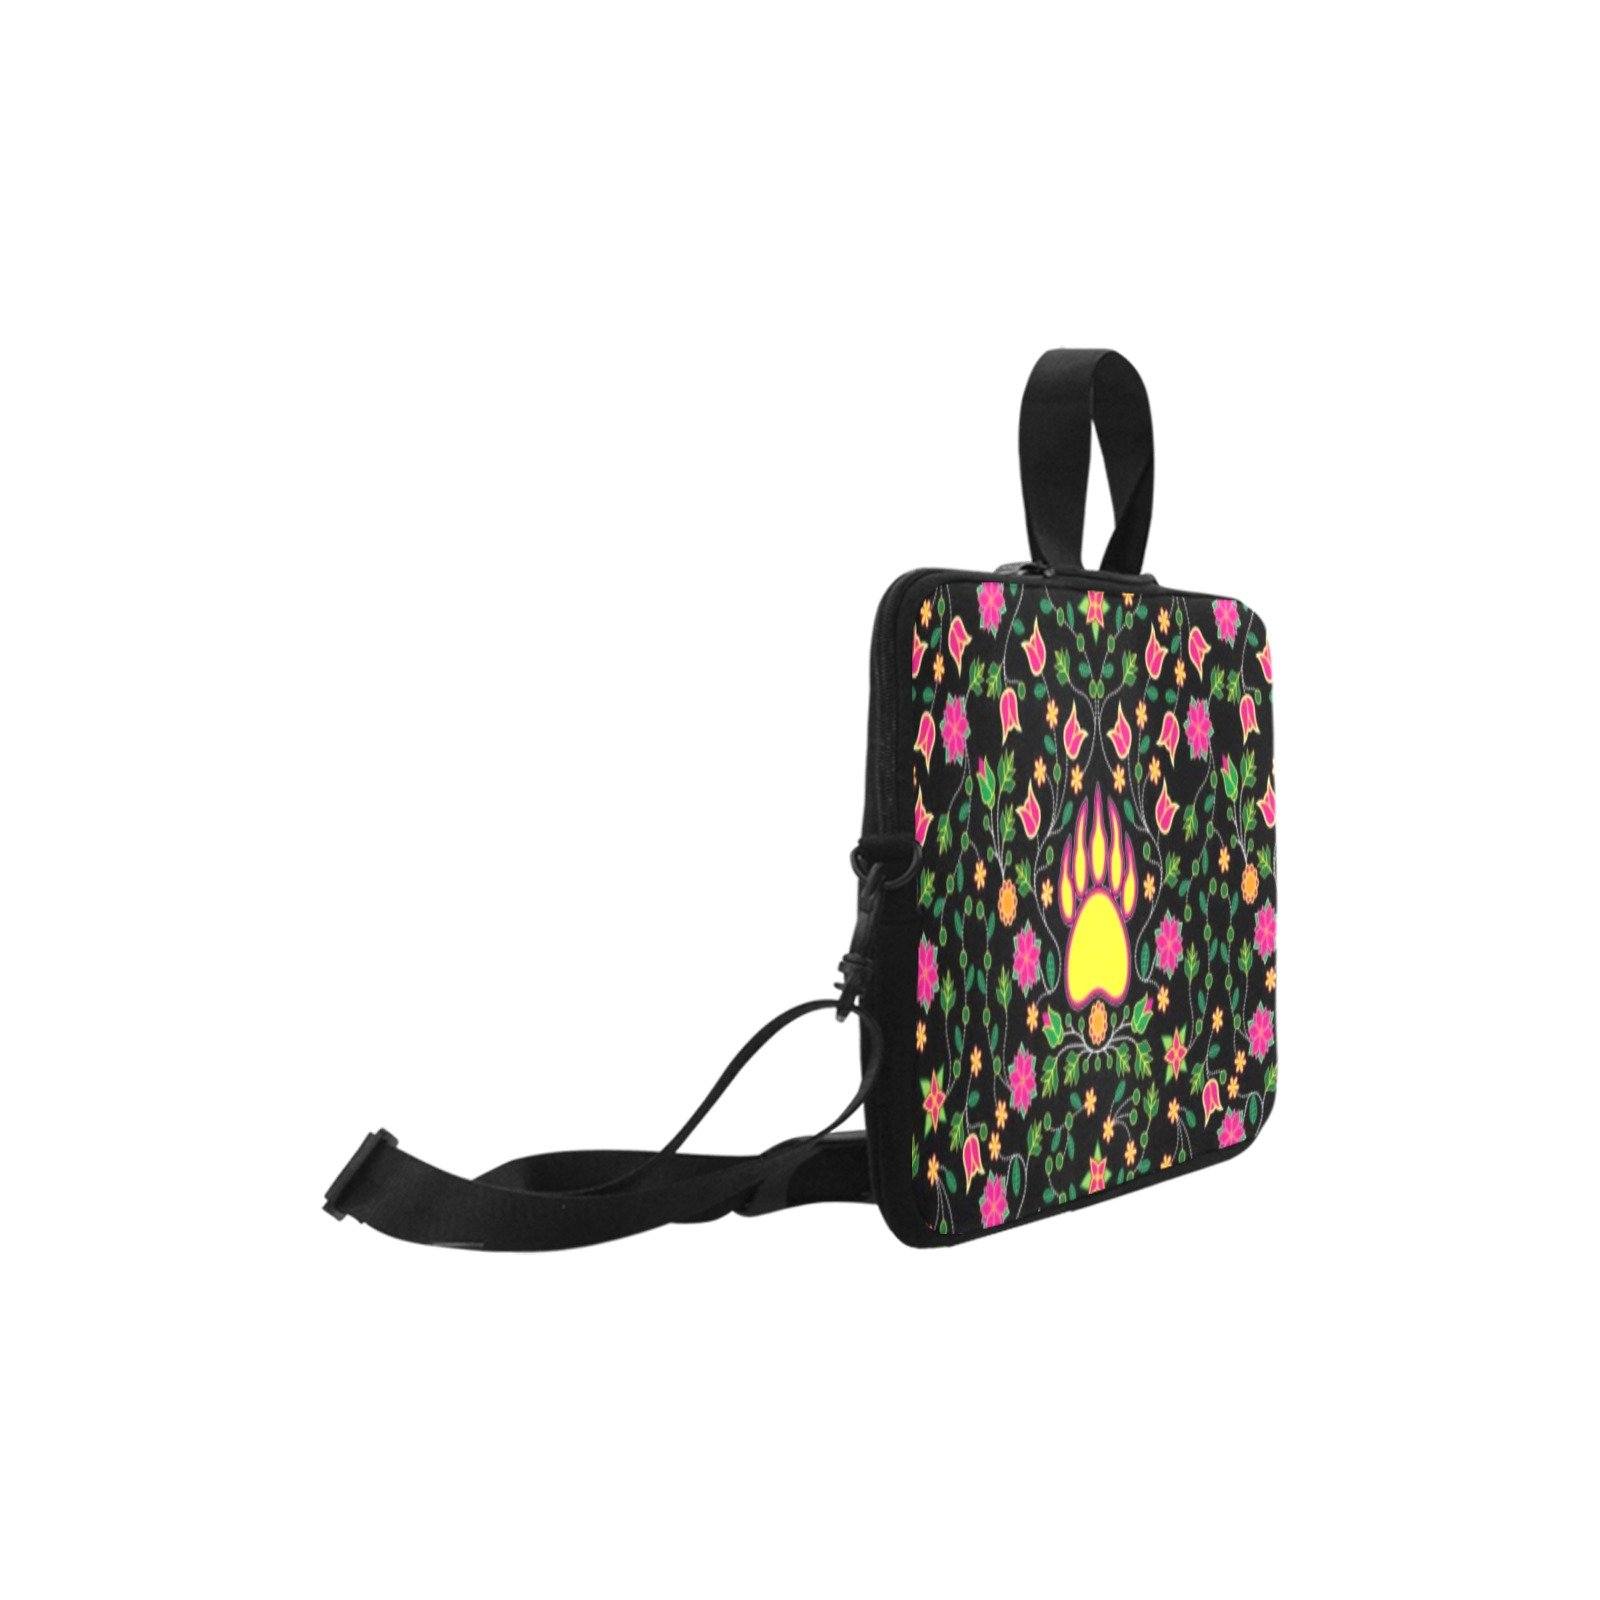 Floral Bearpaw Pink and Yellow Laptop Handbags 11" bag e-joyer 